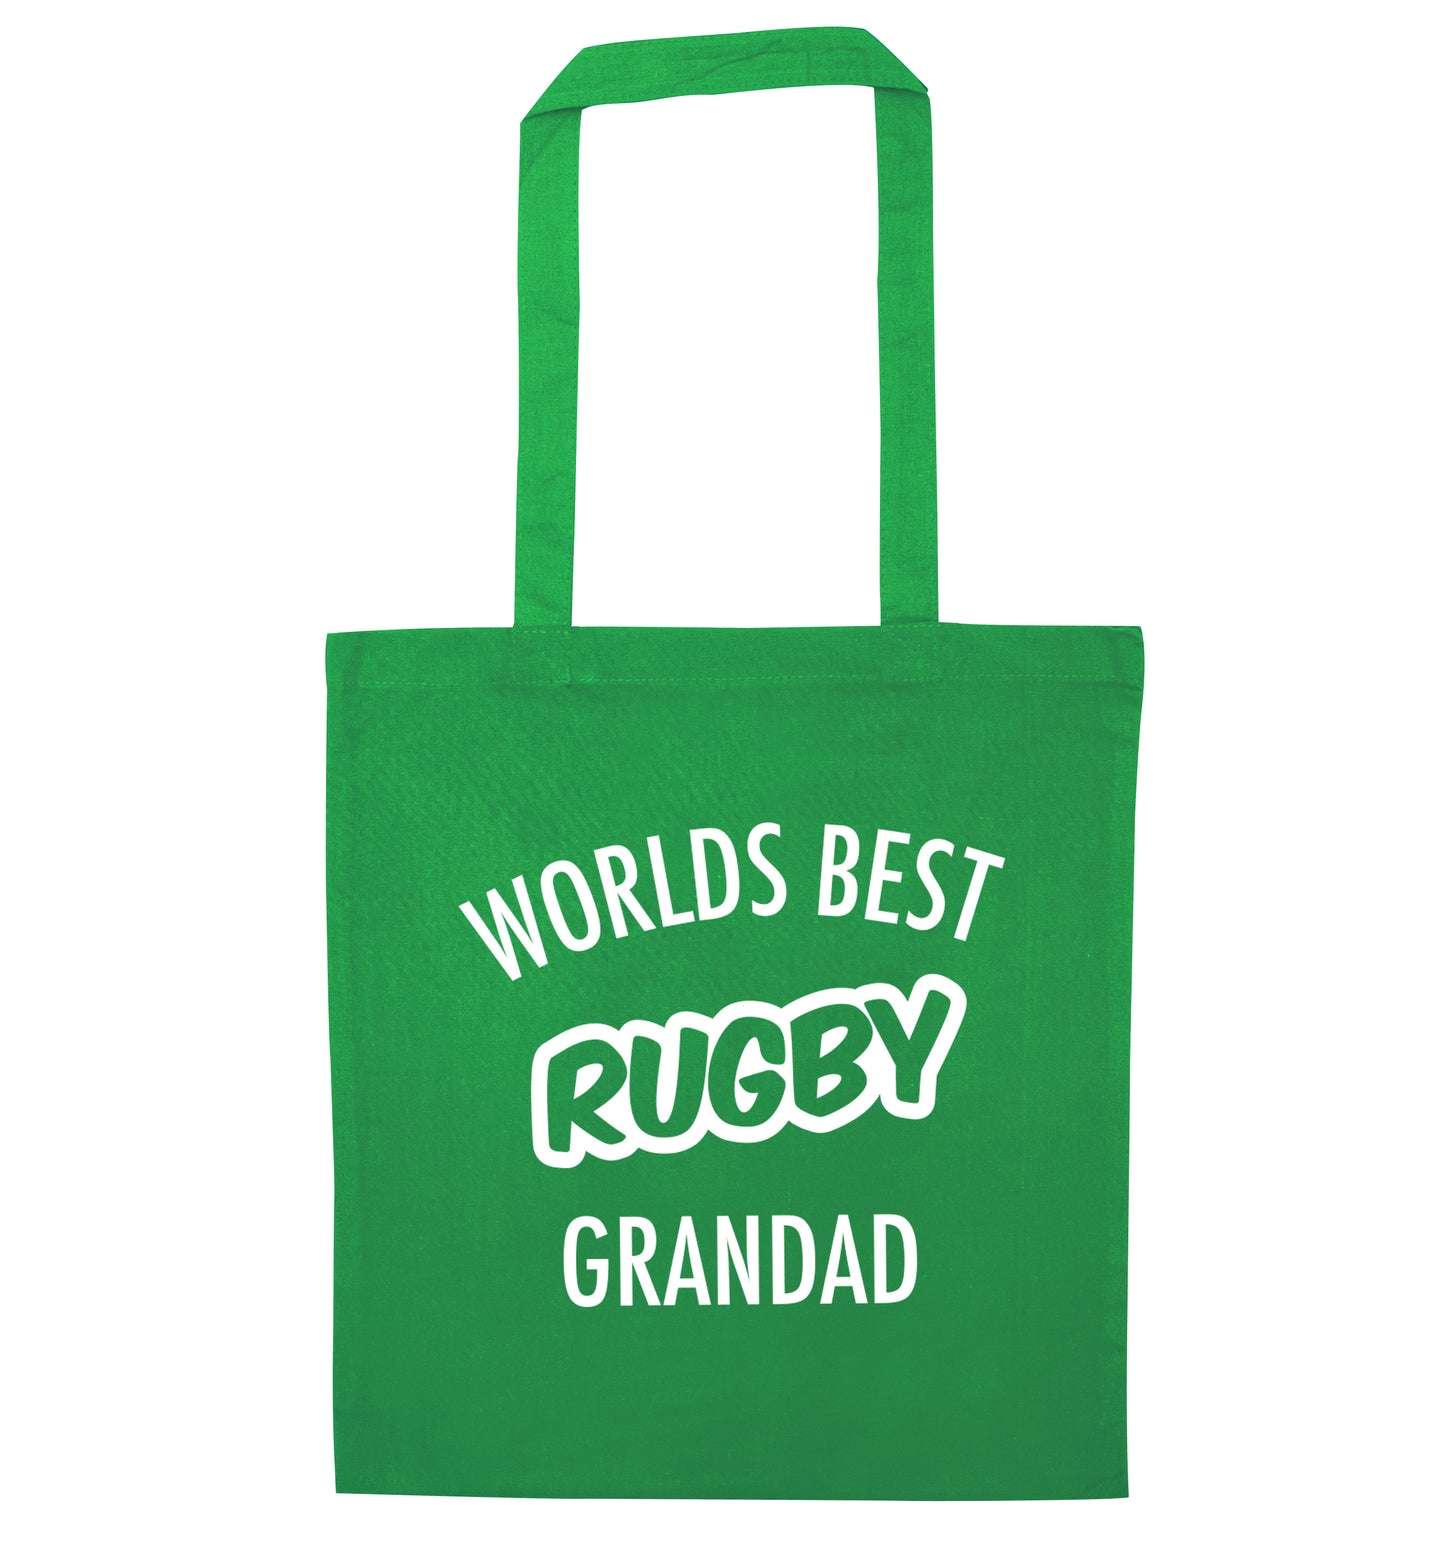 Worlds best rugby grandad green tote bag